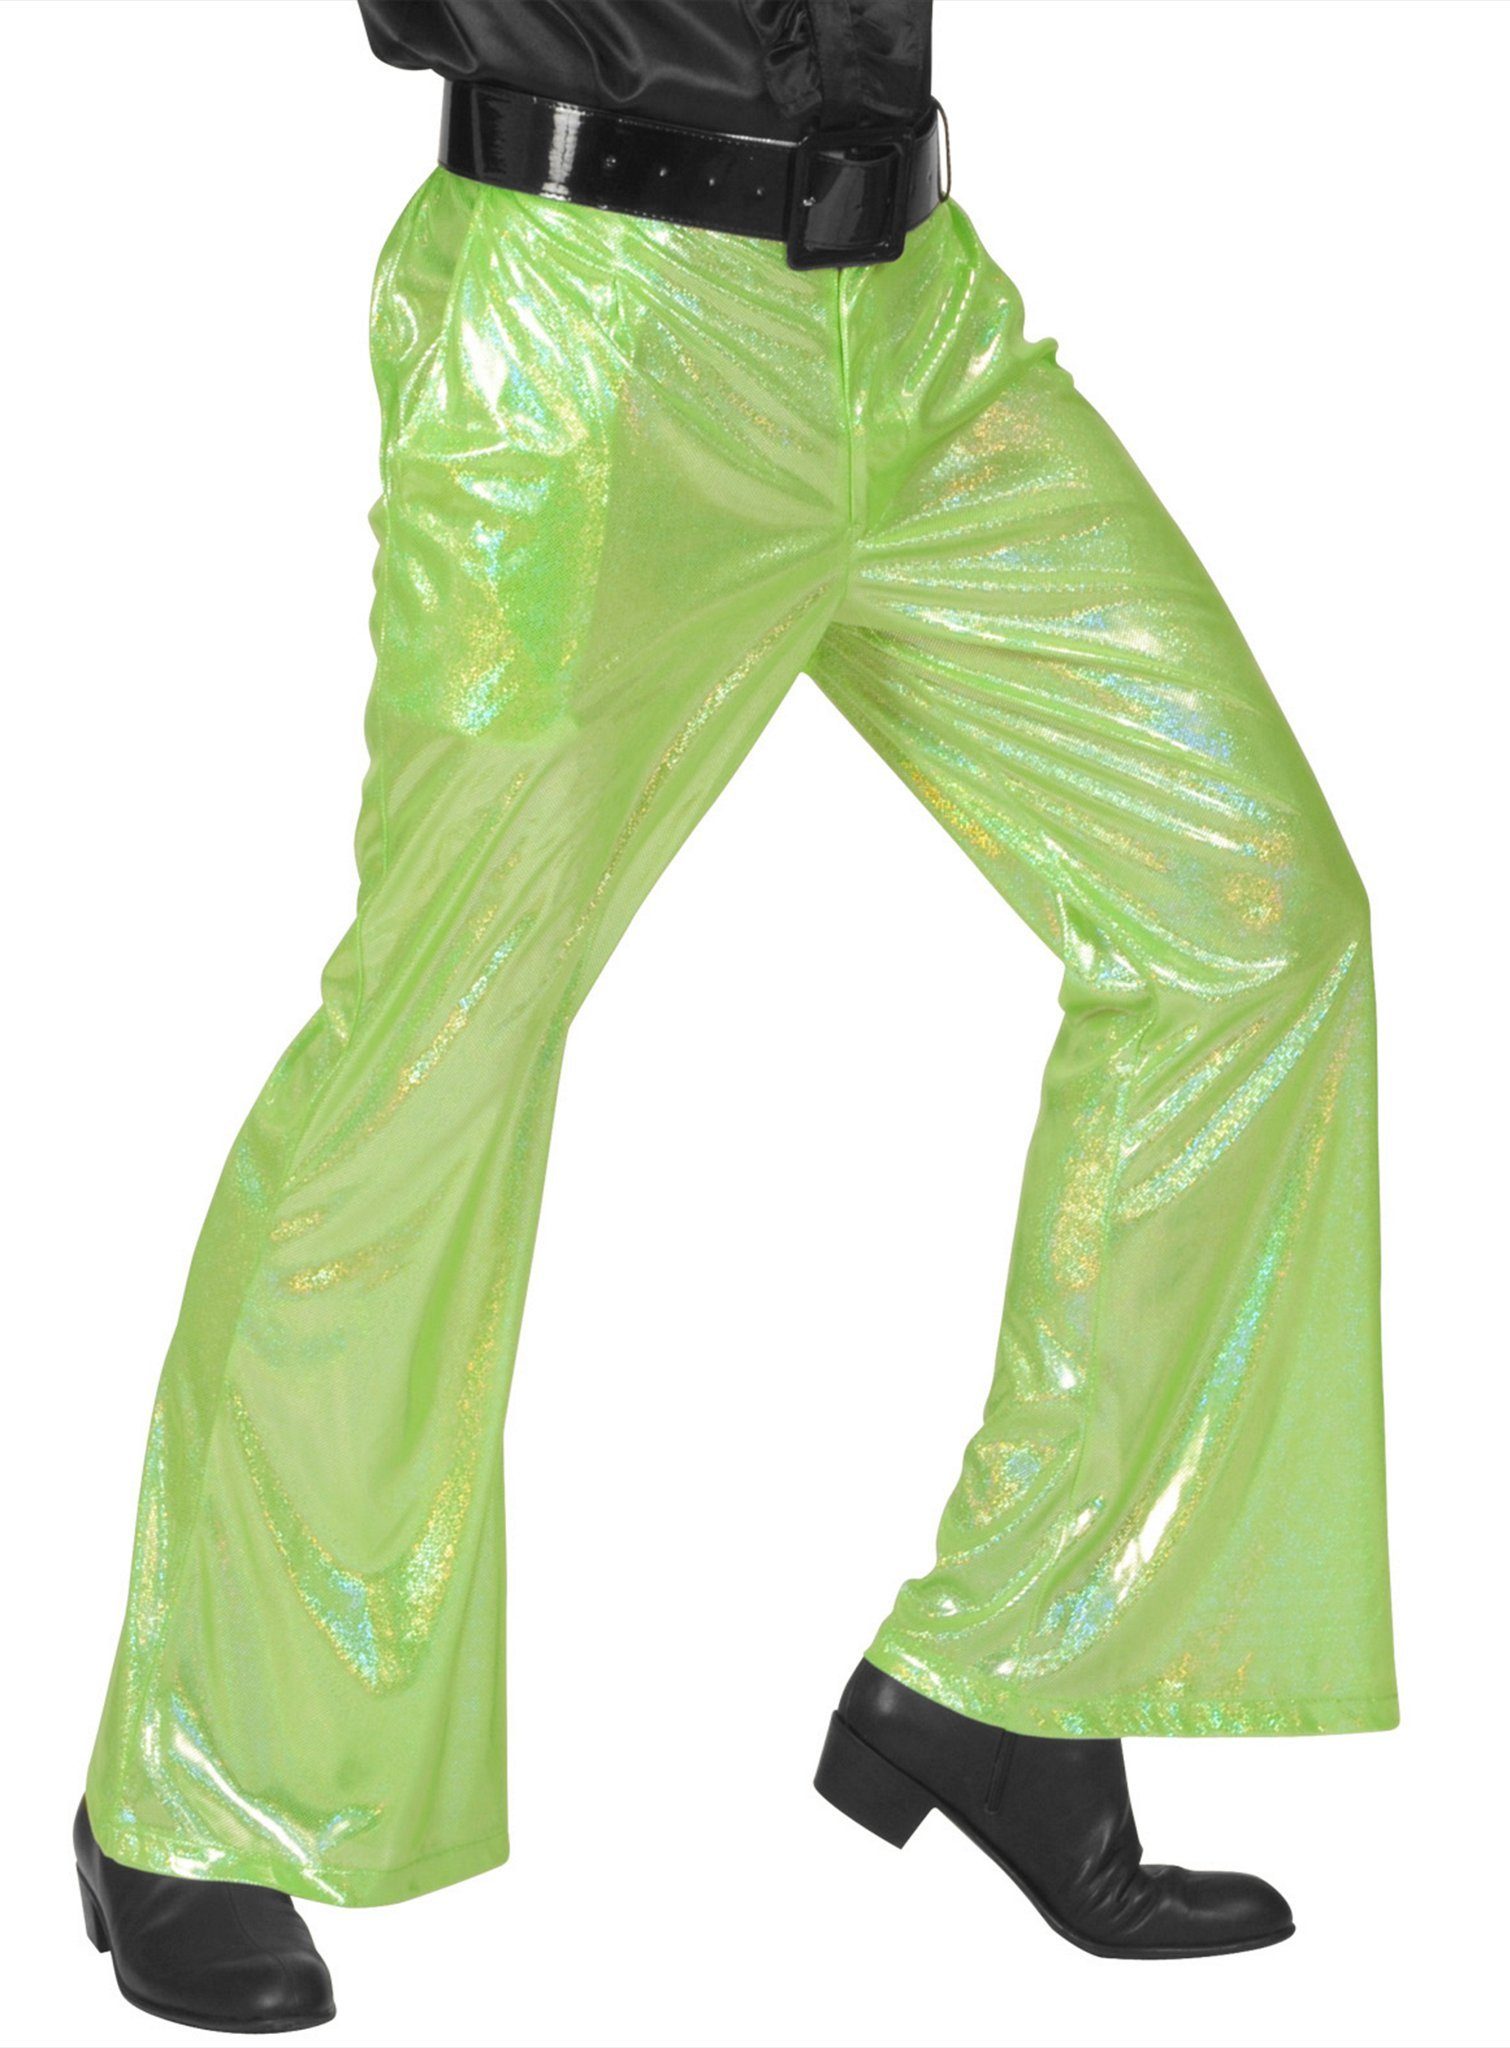 Metamorph Kostüm Fishnet Leggings neon-grün Größe S-M, Grellgrüne Netzhose  im 80er Jahre Look